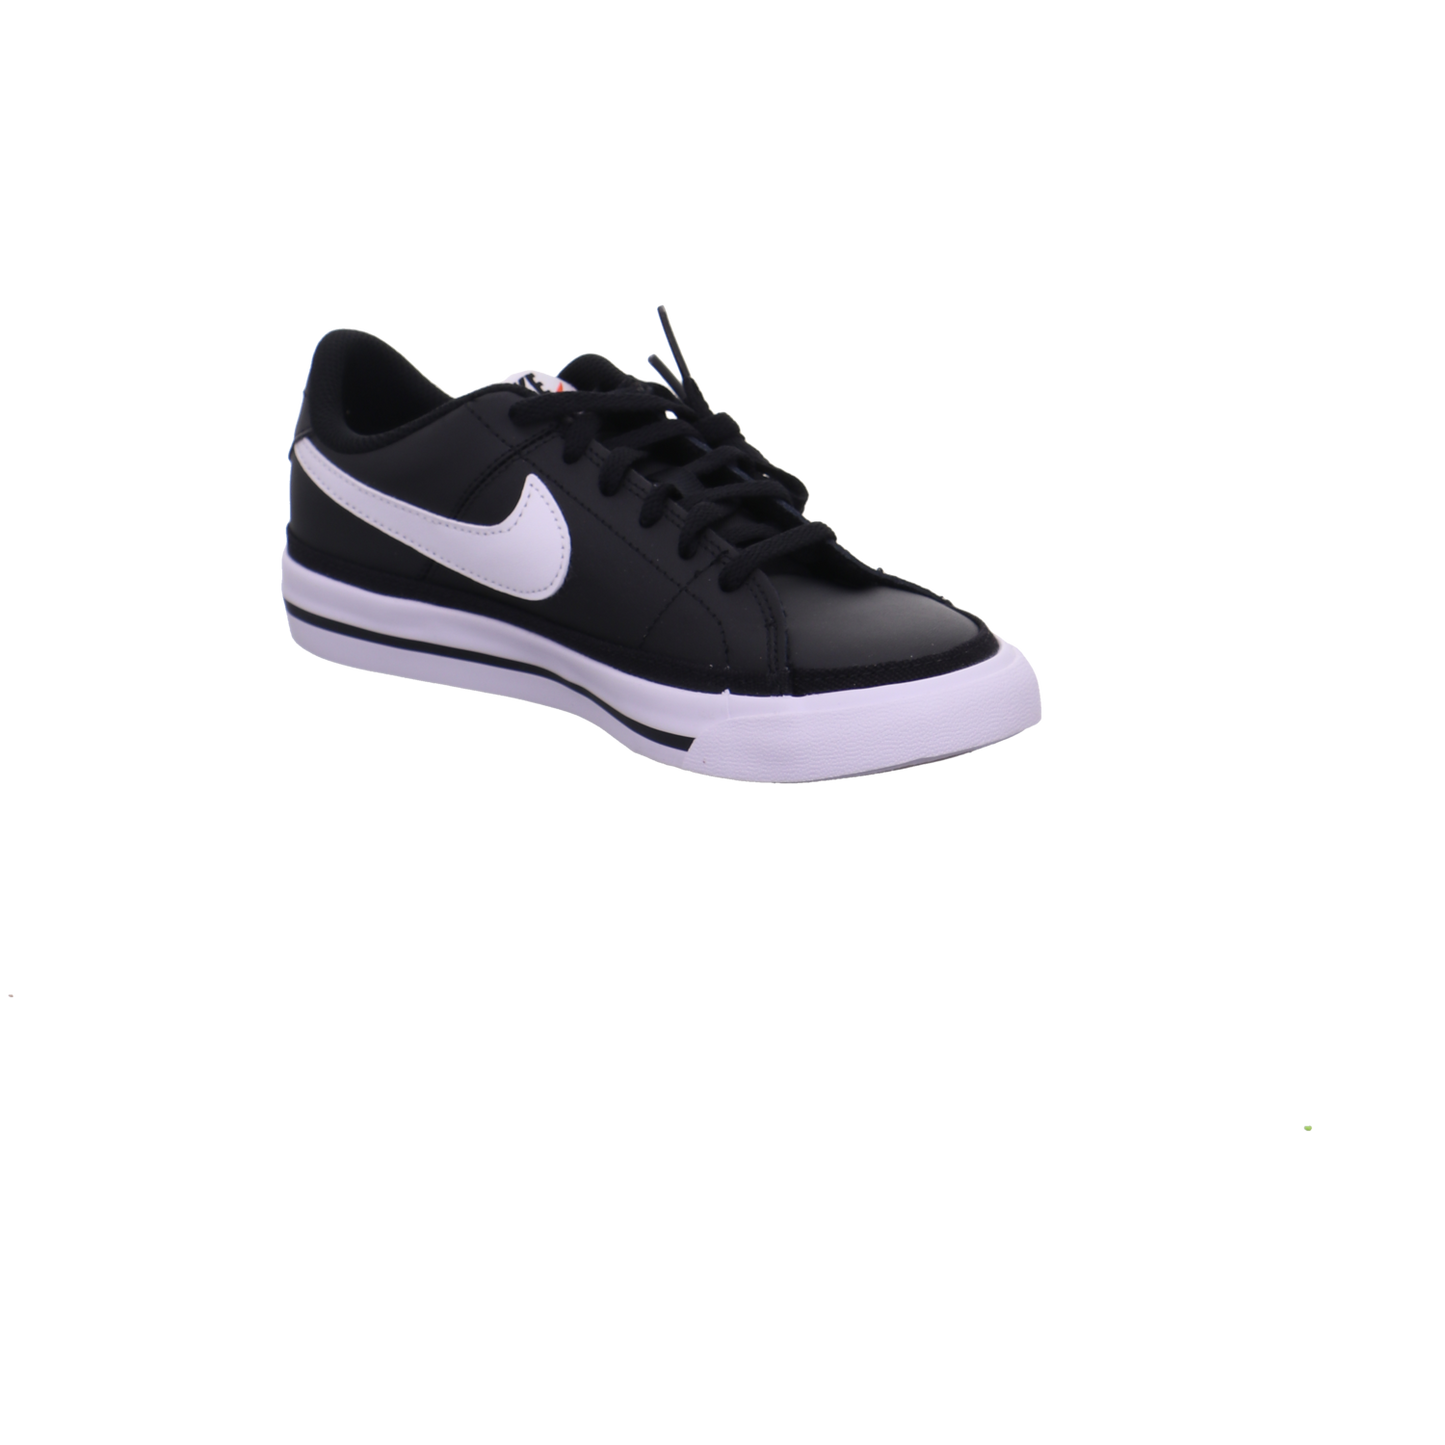 Nike Sneaker schwarz-weiß Bild7